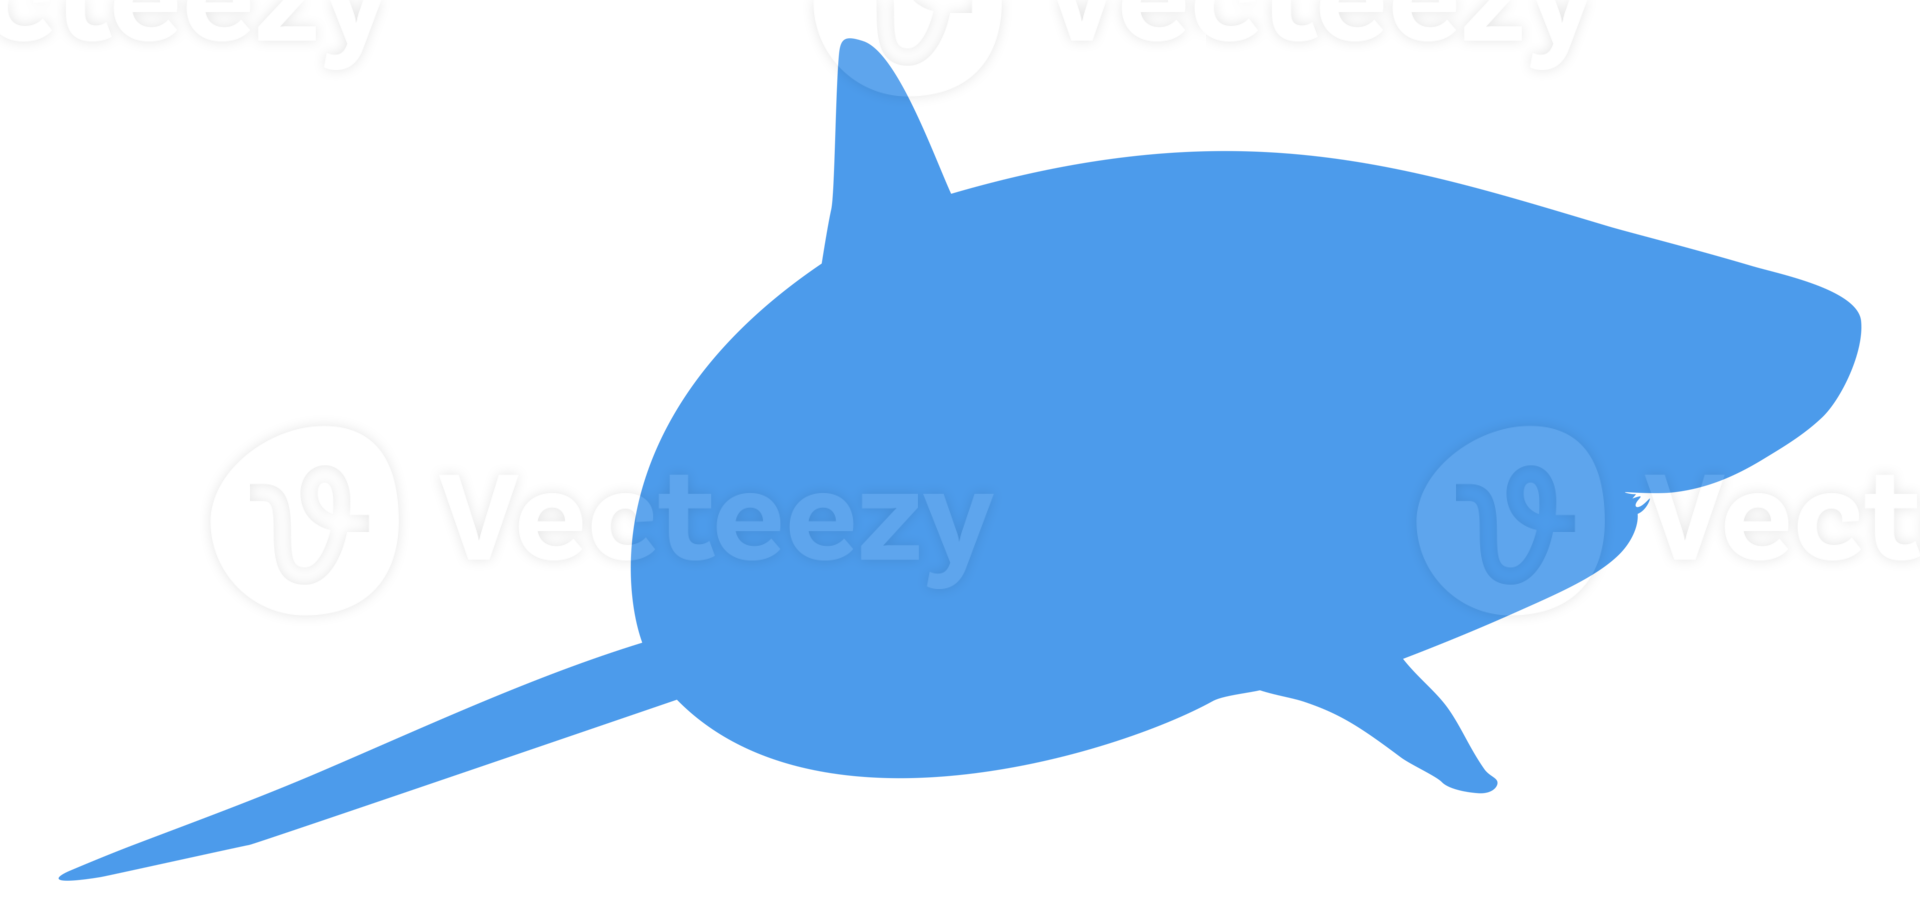 silueta de tiburón para logotipo, pictograma, sitio web, ilustración de arte, infografía o elemento de diseño gráfico. formato png